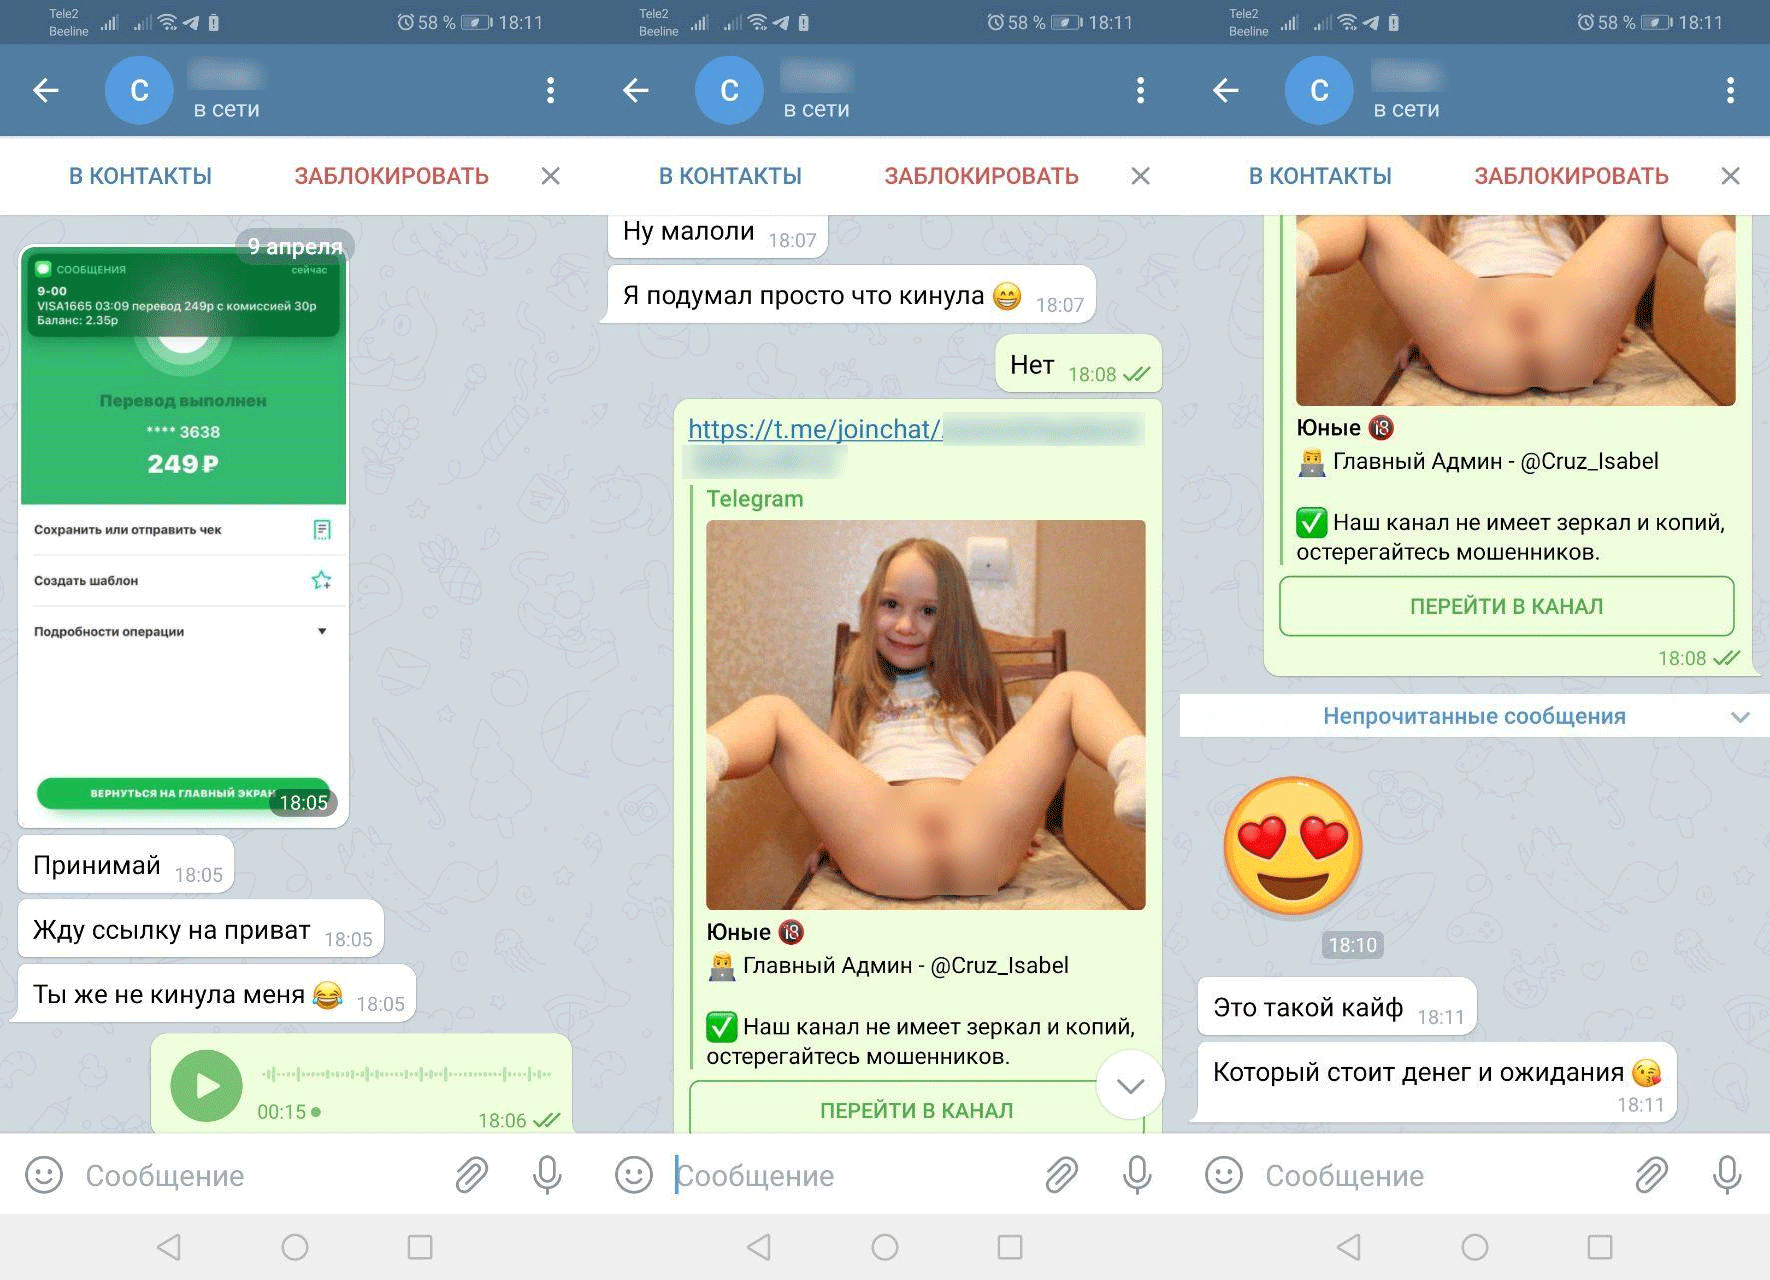 Porn links in telegram